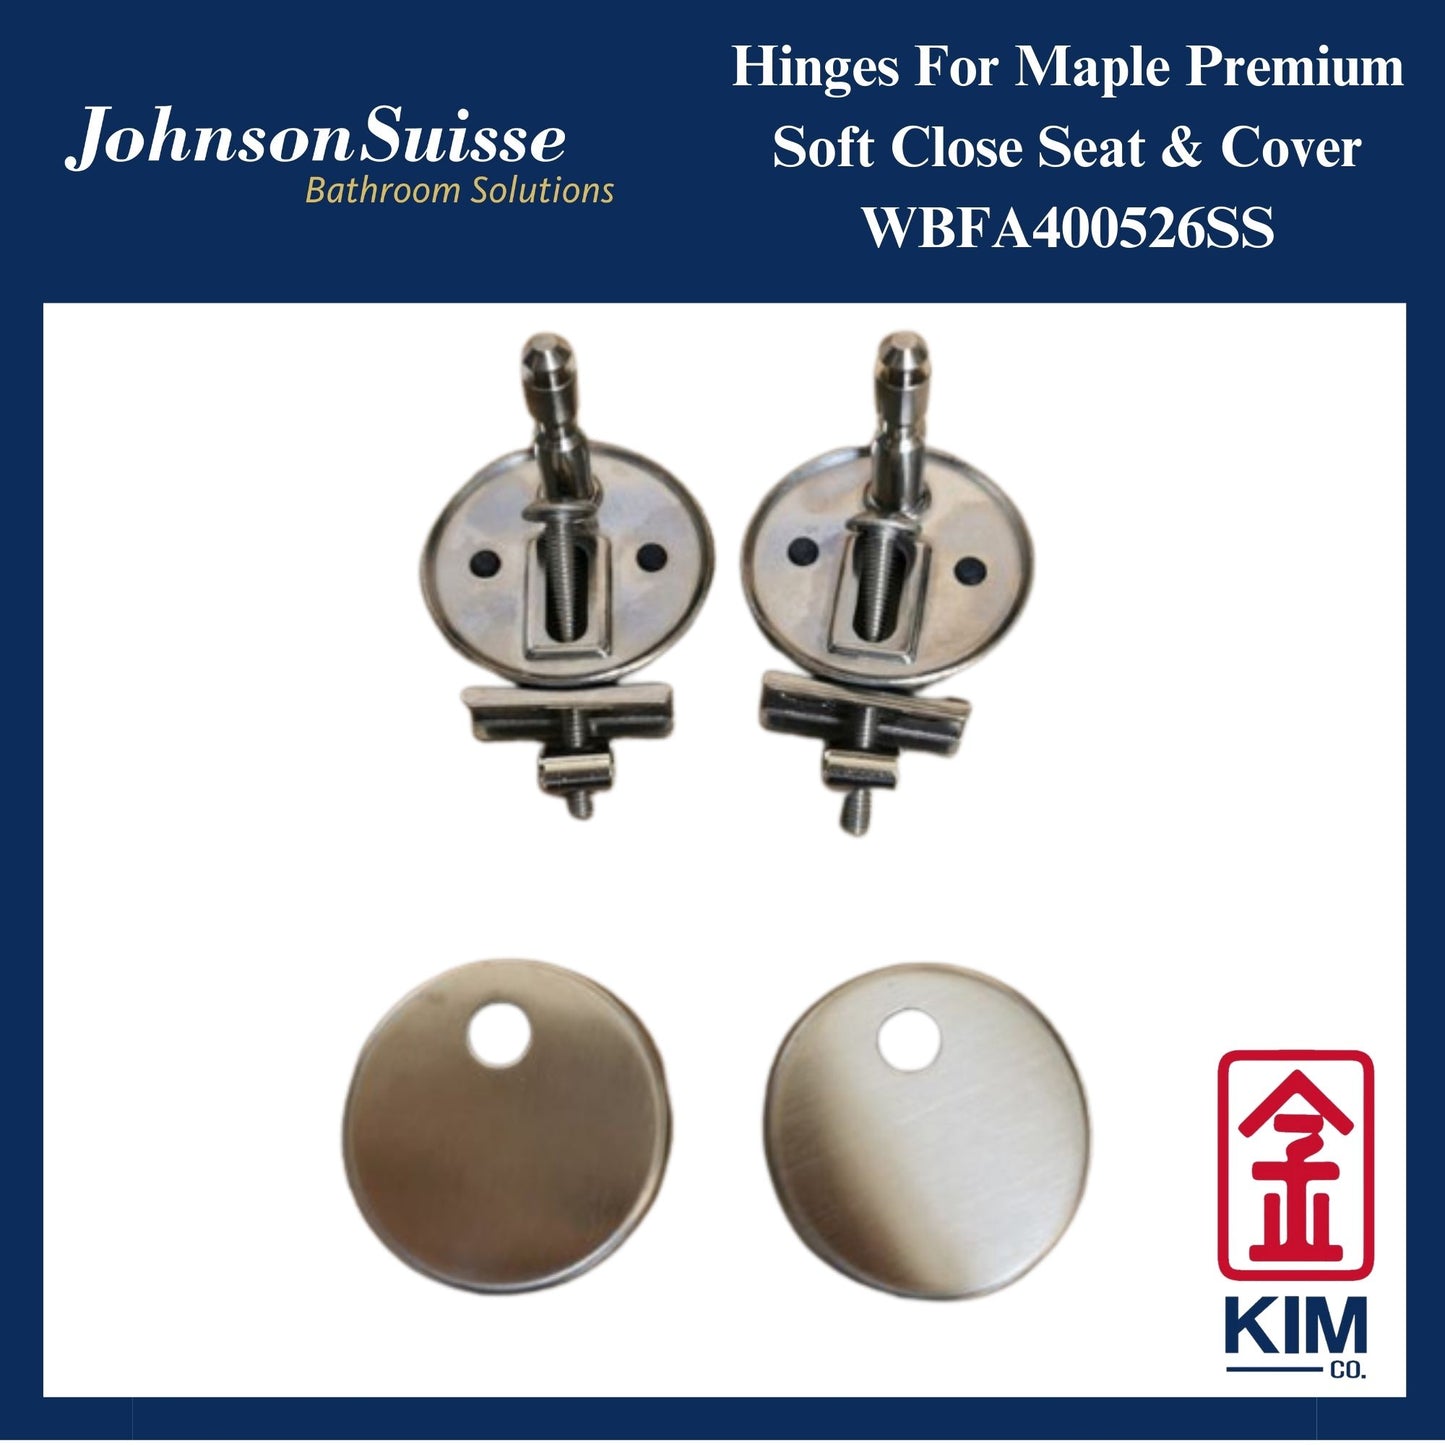 Johnson Suisse Hinges For Maple Premium Soft Close Seat & Cover (WBFA400526SS)